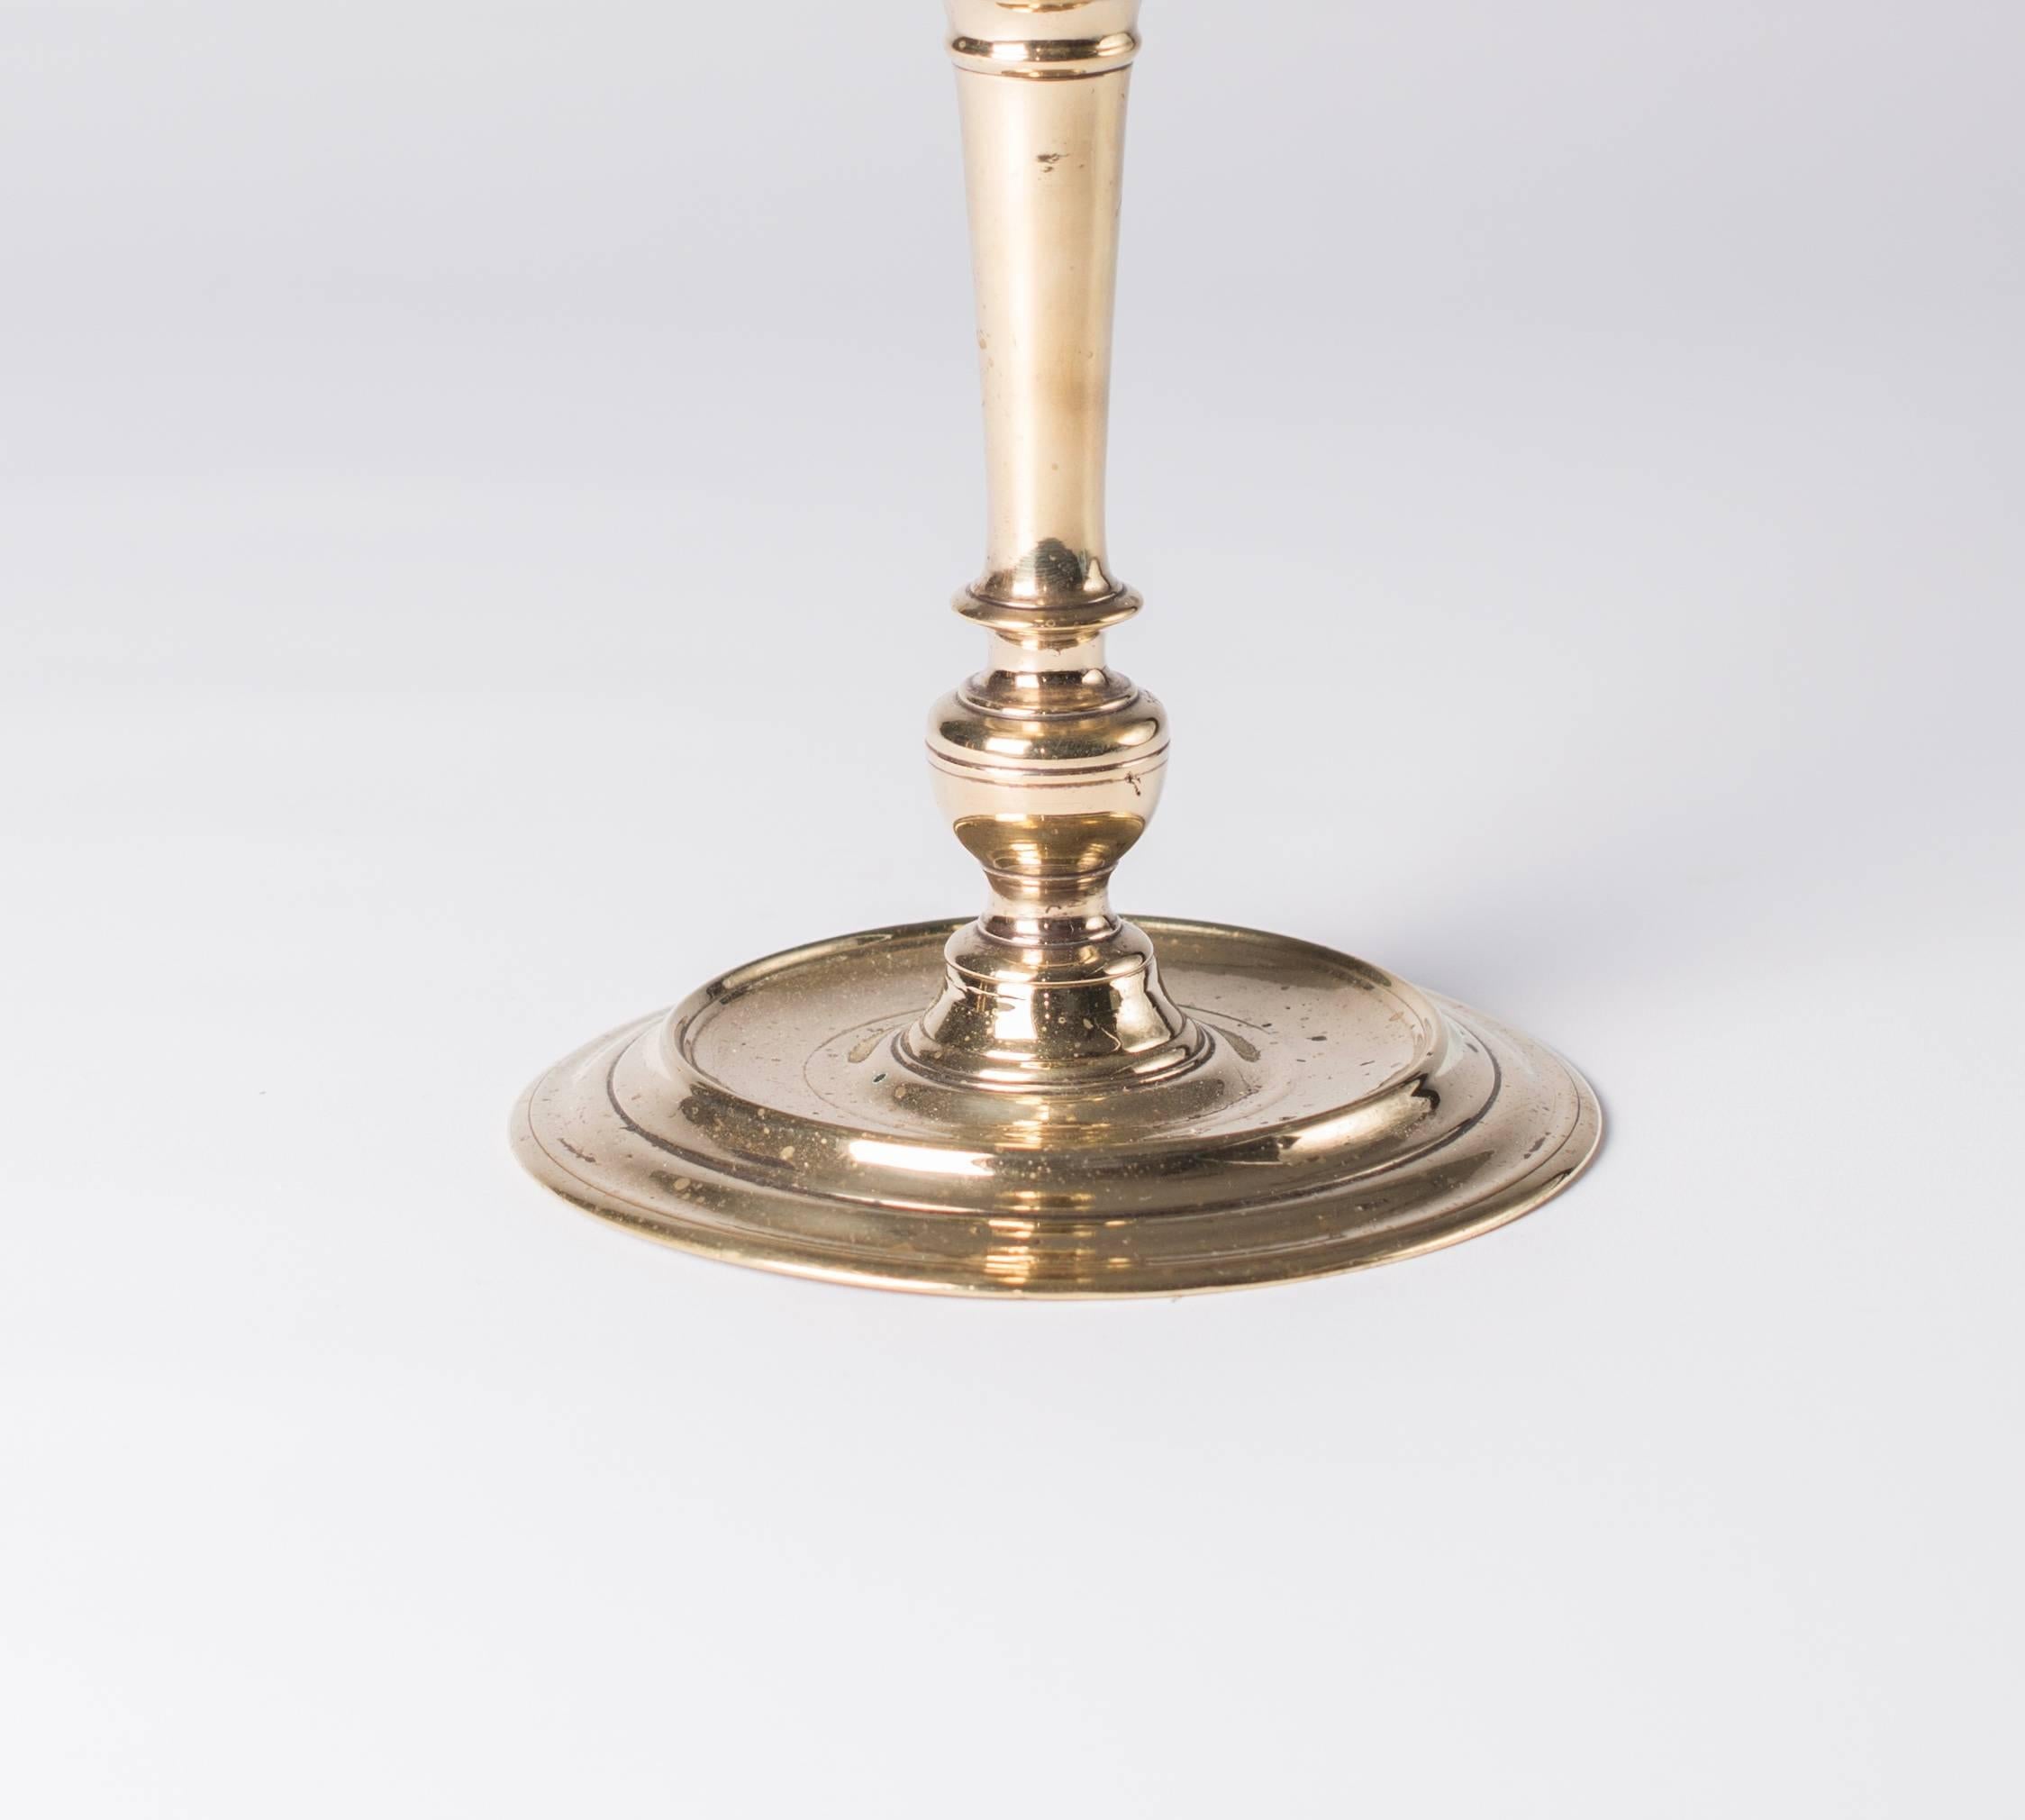 16th century candlestick